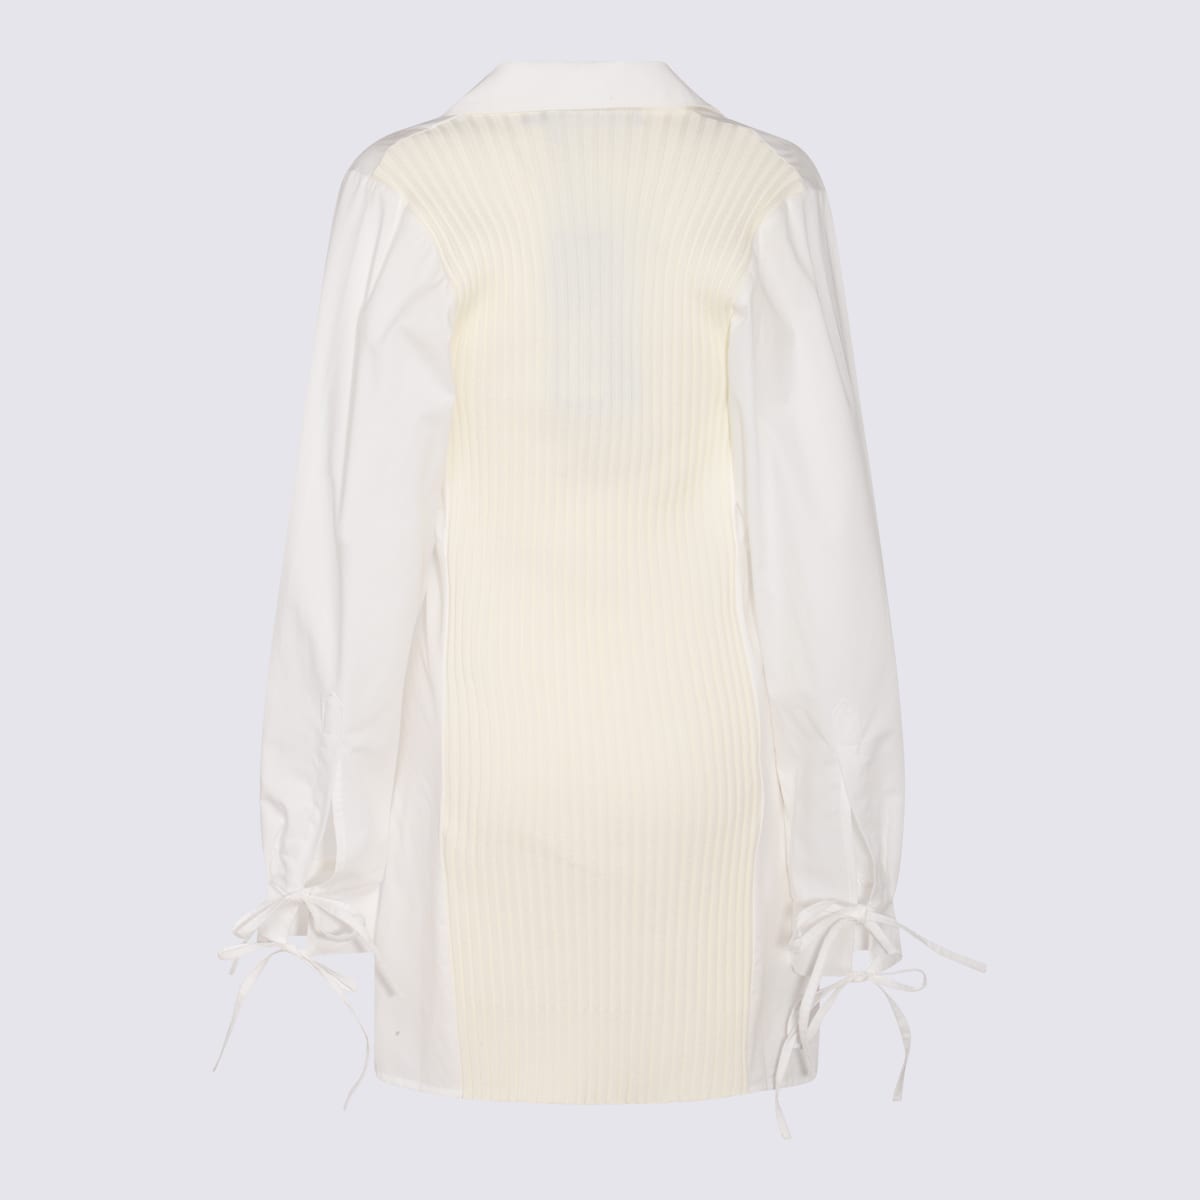 ANDREĀDAMO Ivory Cotton Blend Dress